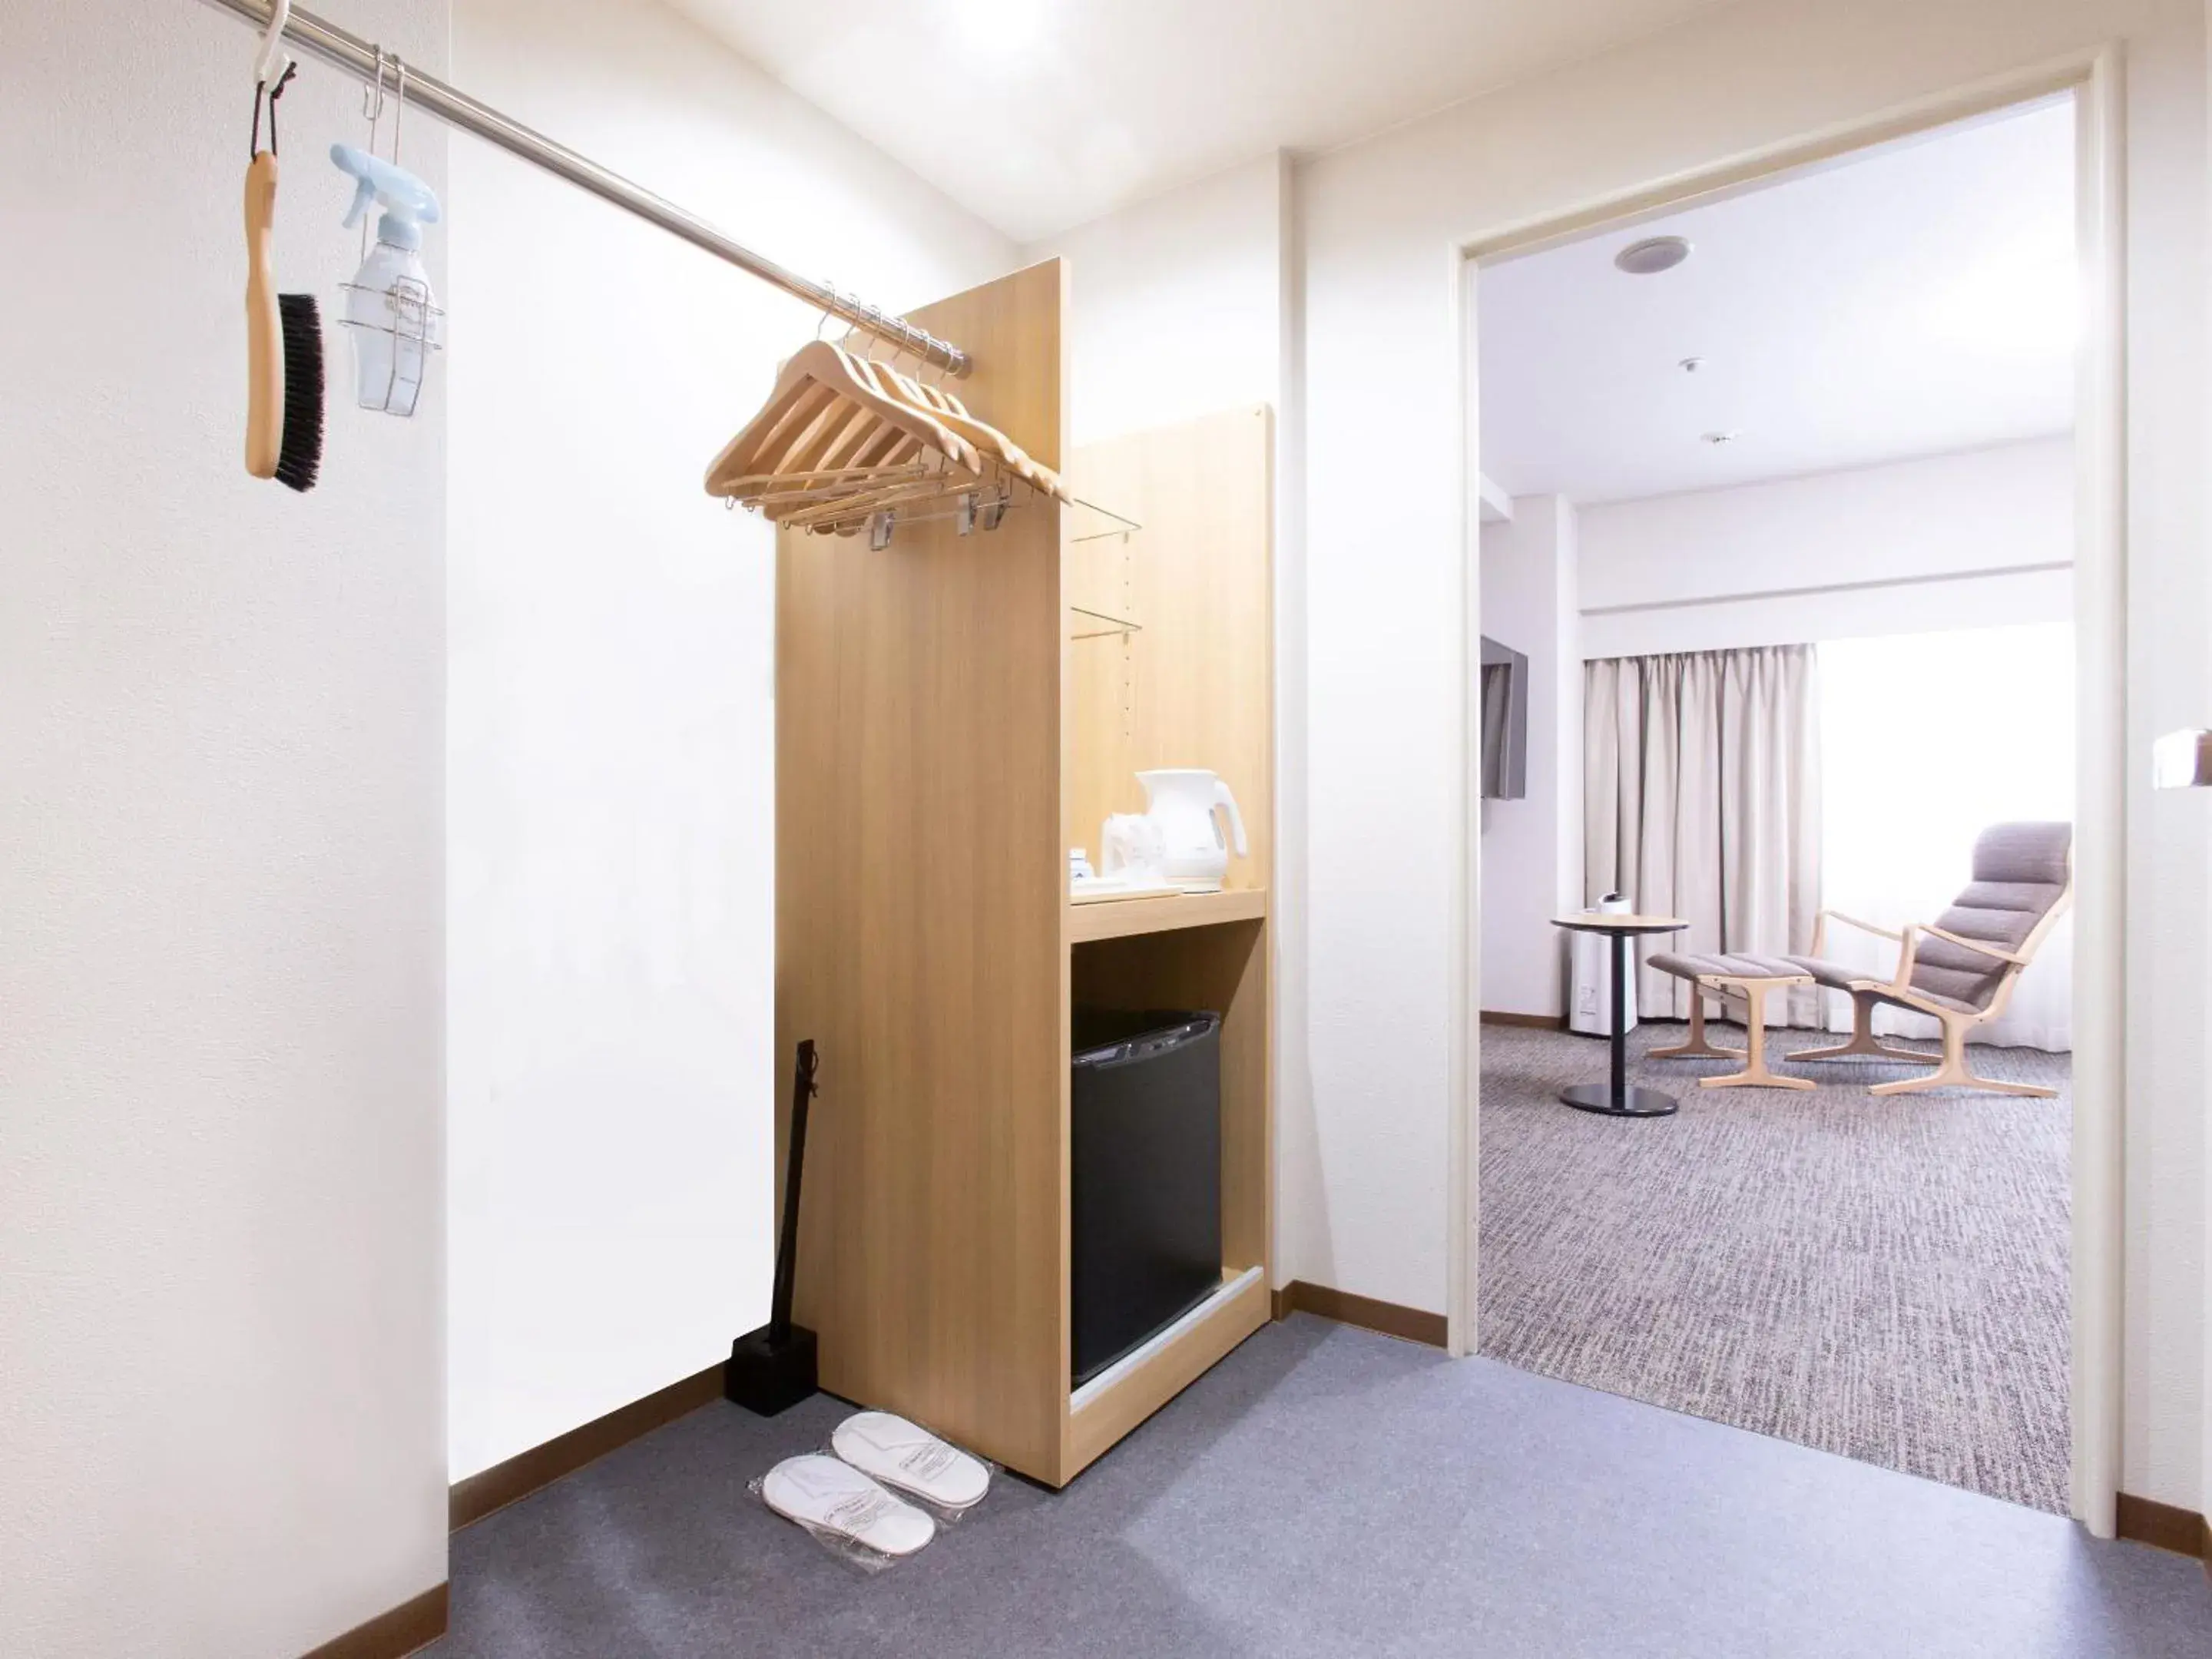 Photo of the whole room in Toyama Chitetsu Hotel